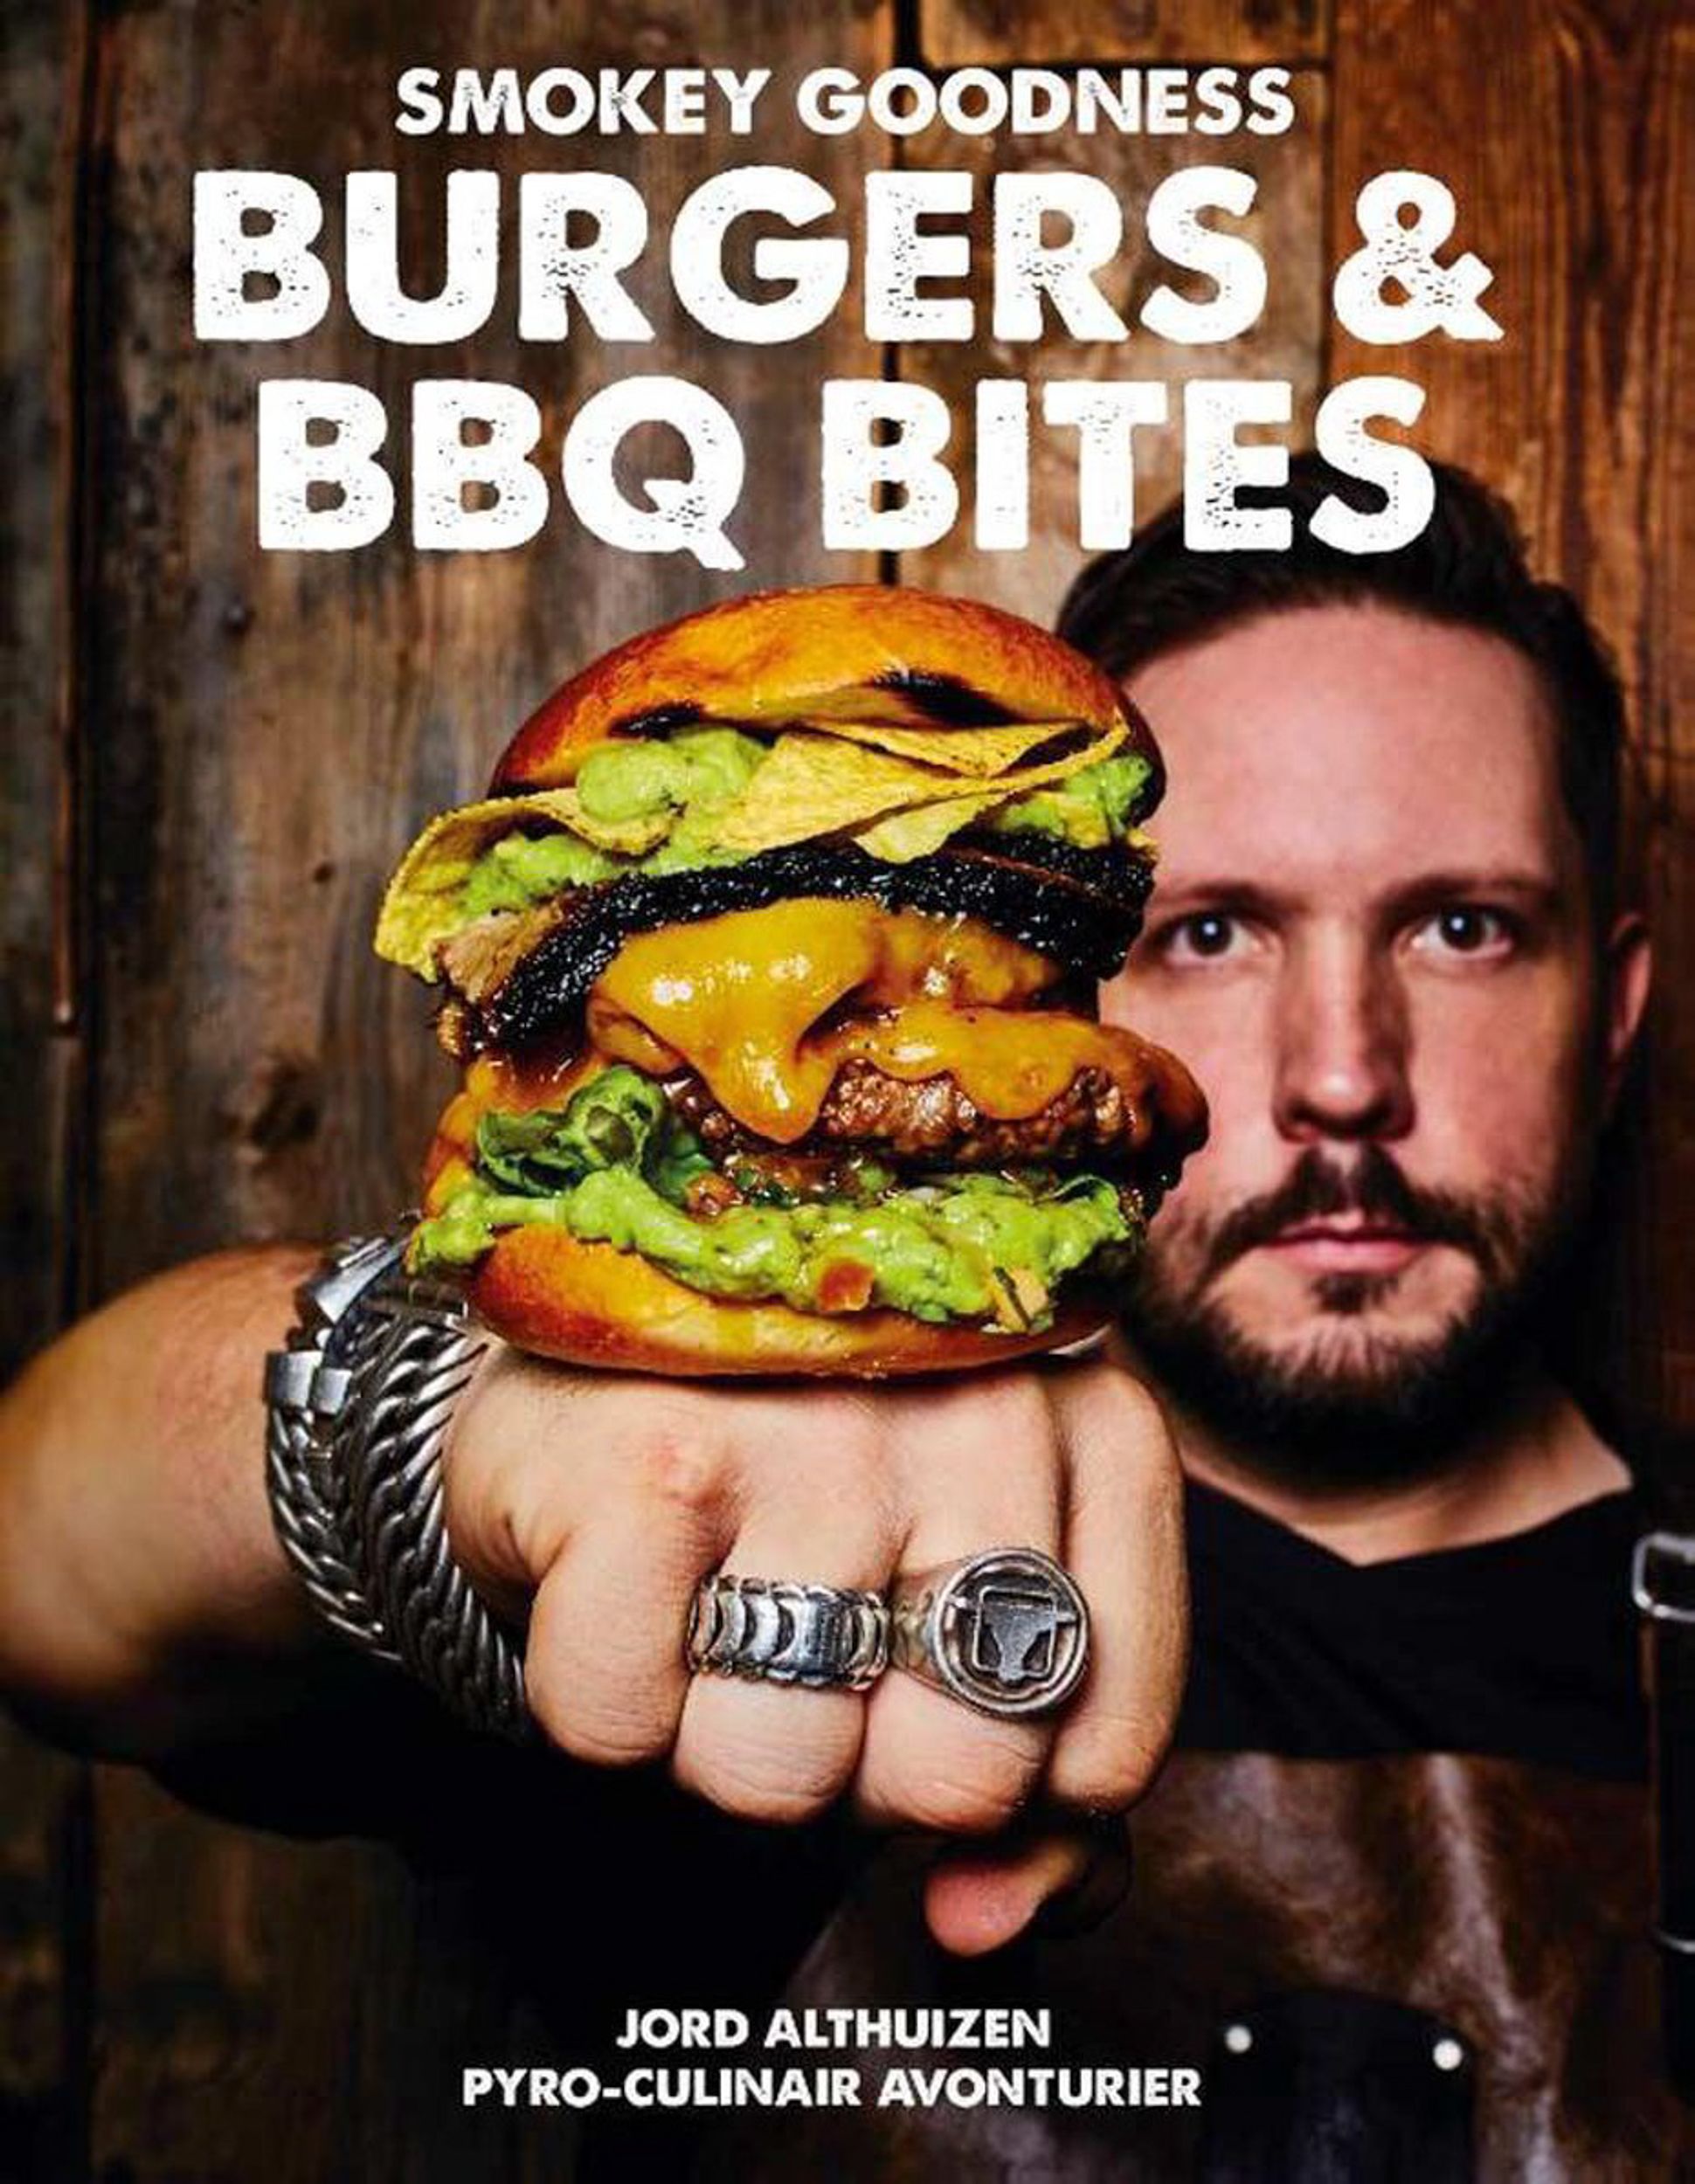 Smokey Goodness - Burgers & BBQ bites  NVT 061243-001-0